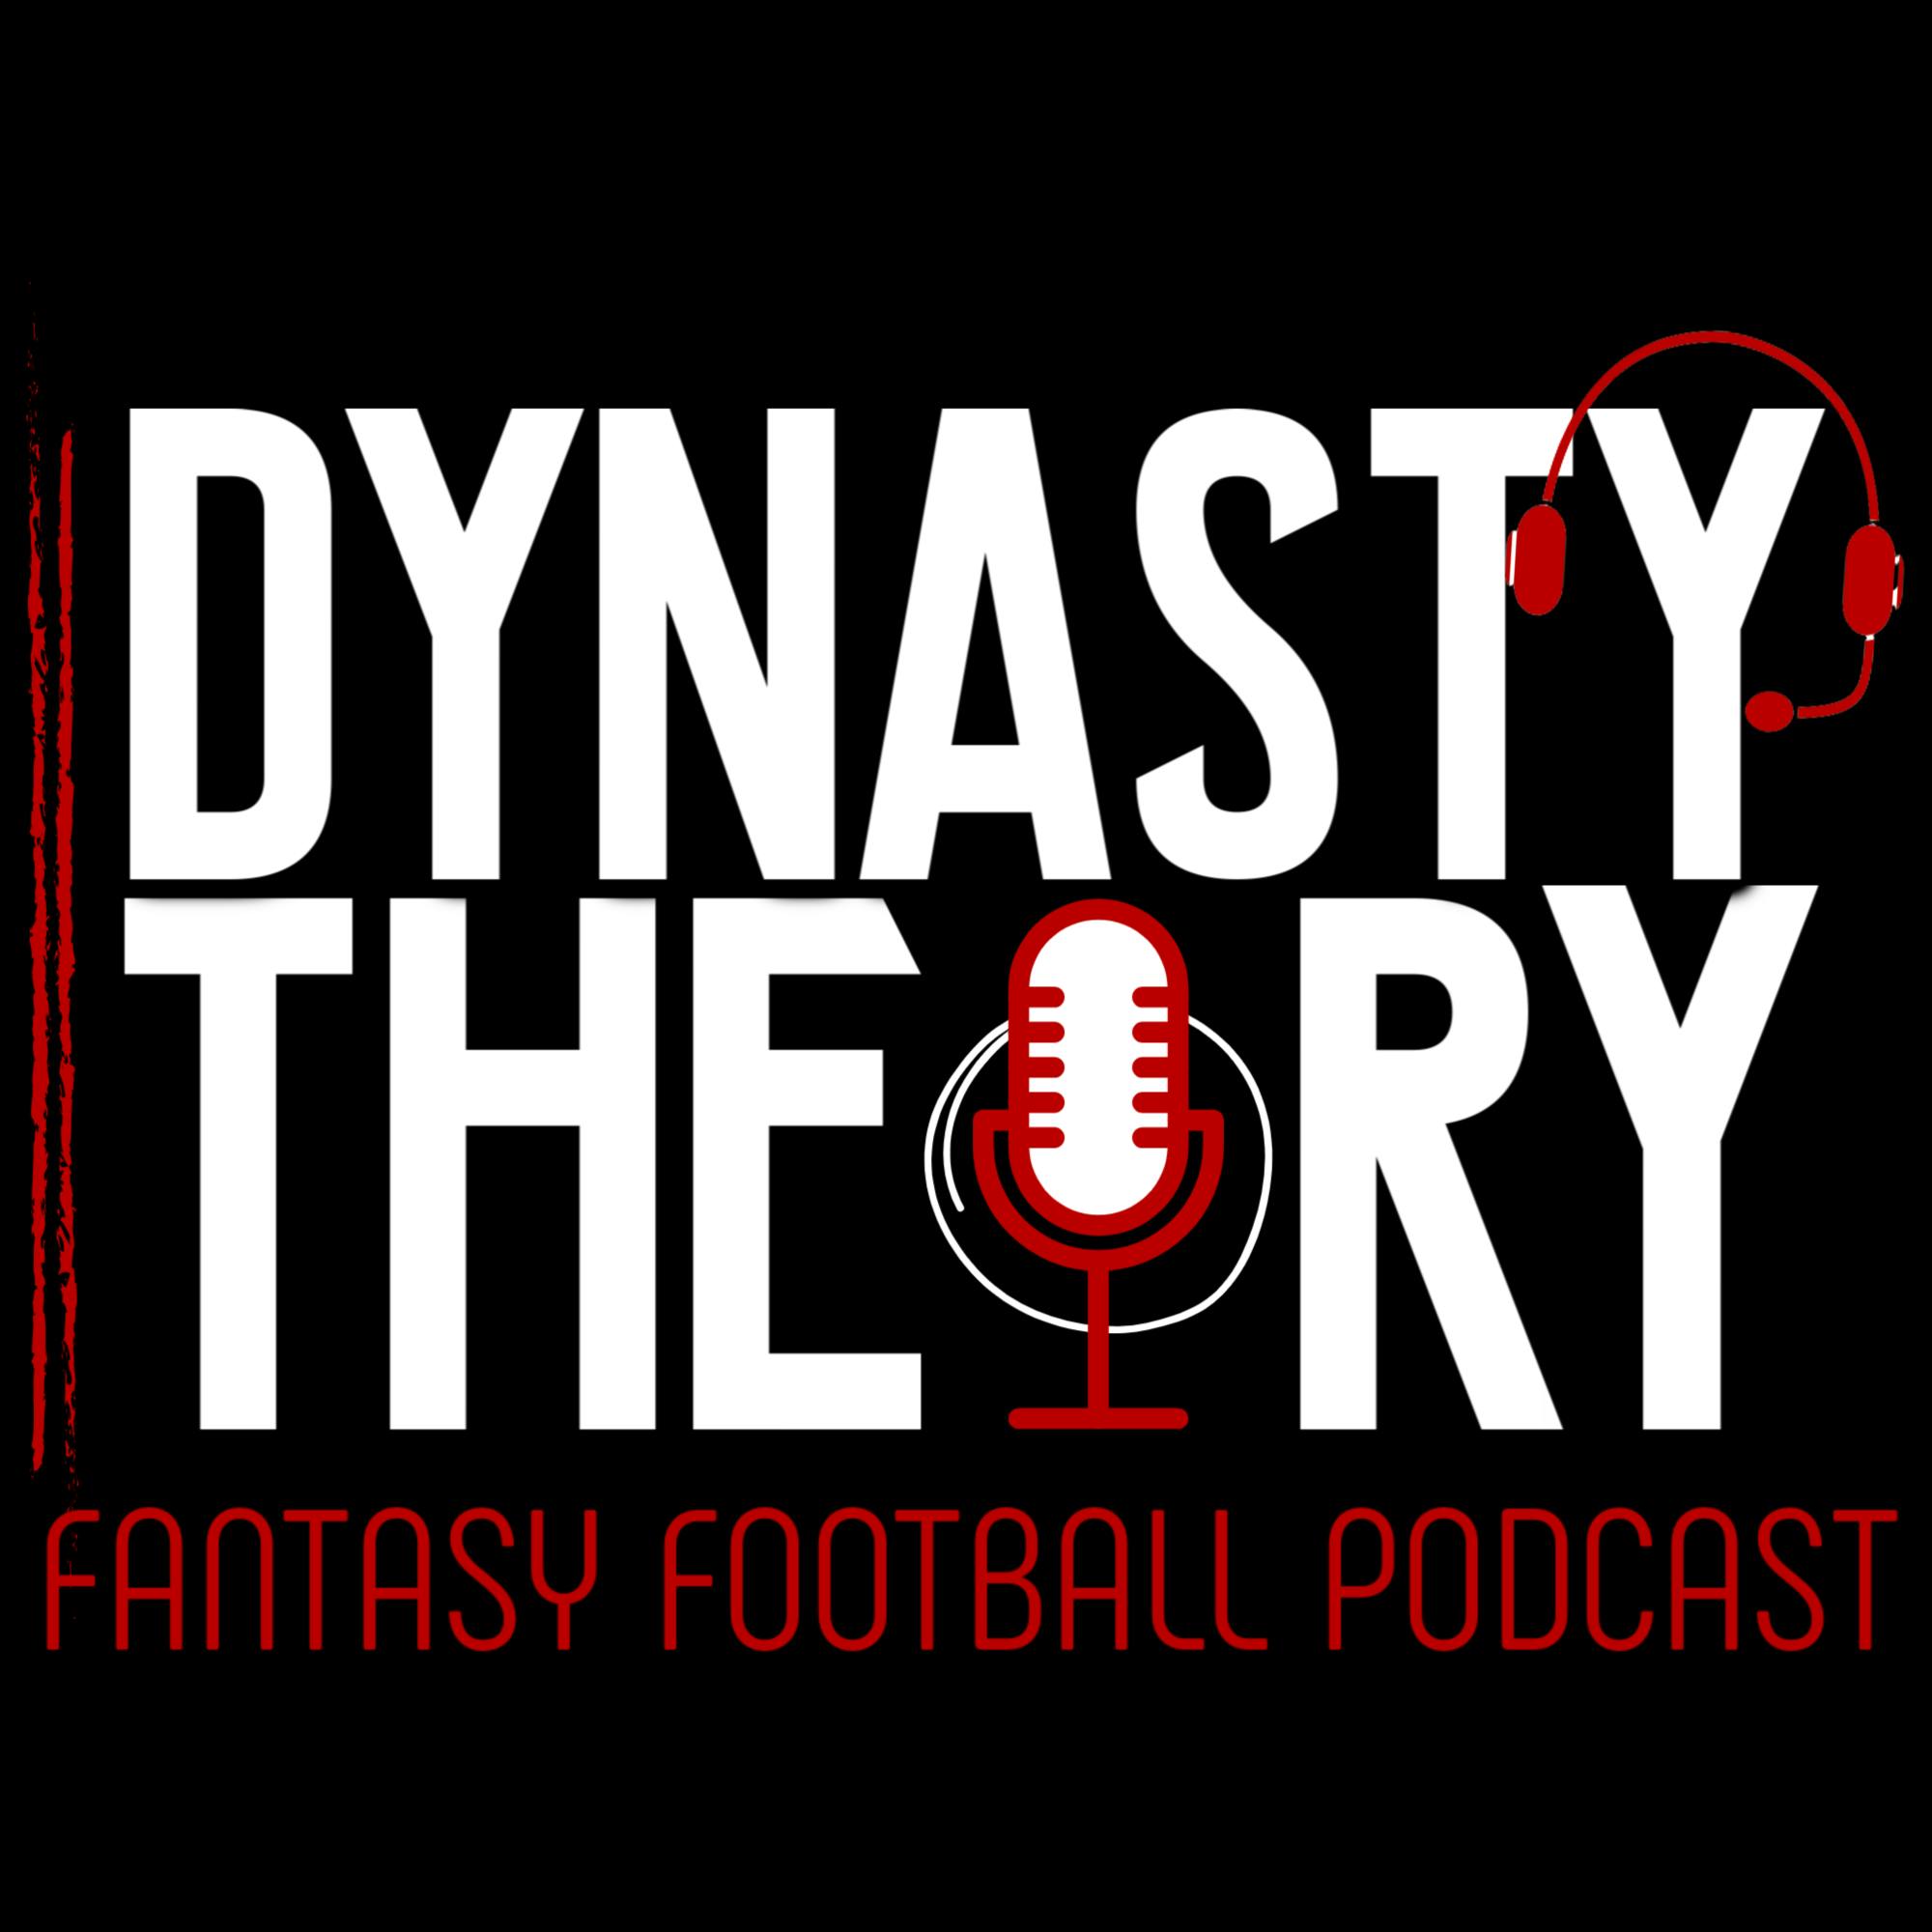 Dynasty League Trade Deadlines